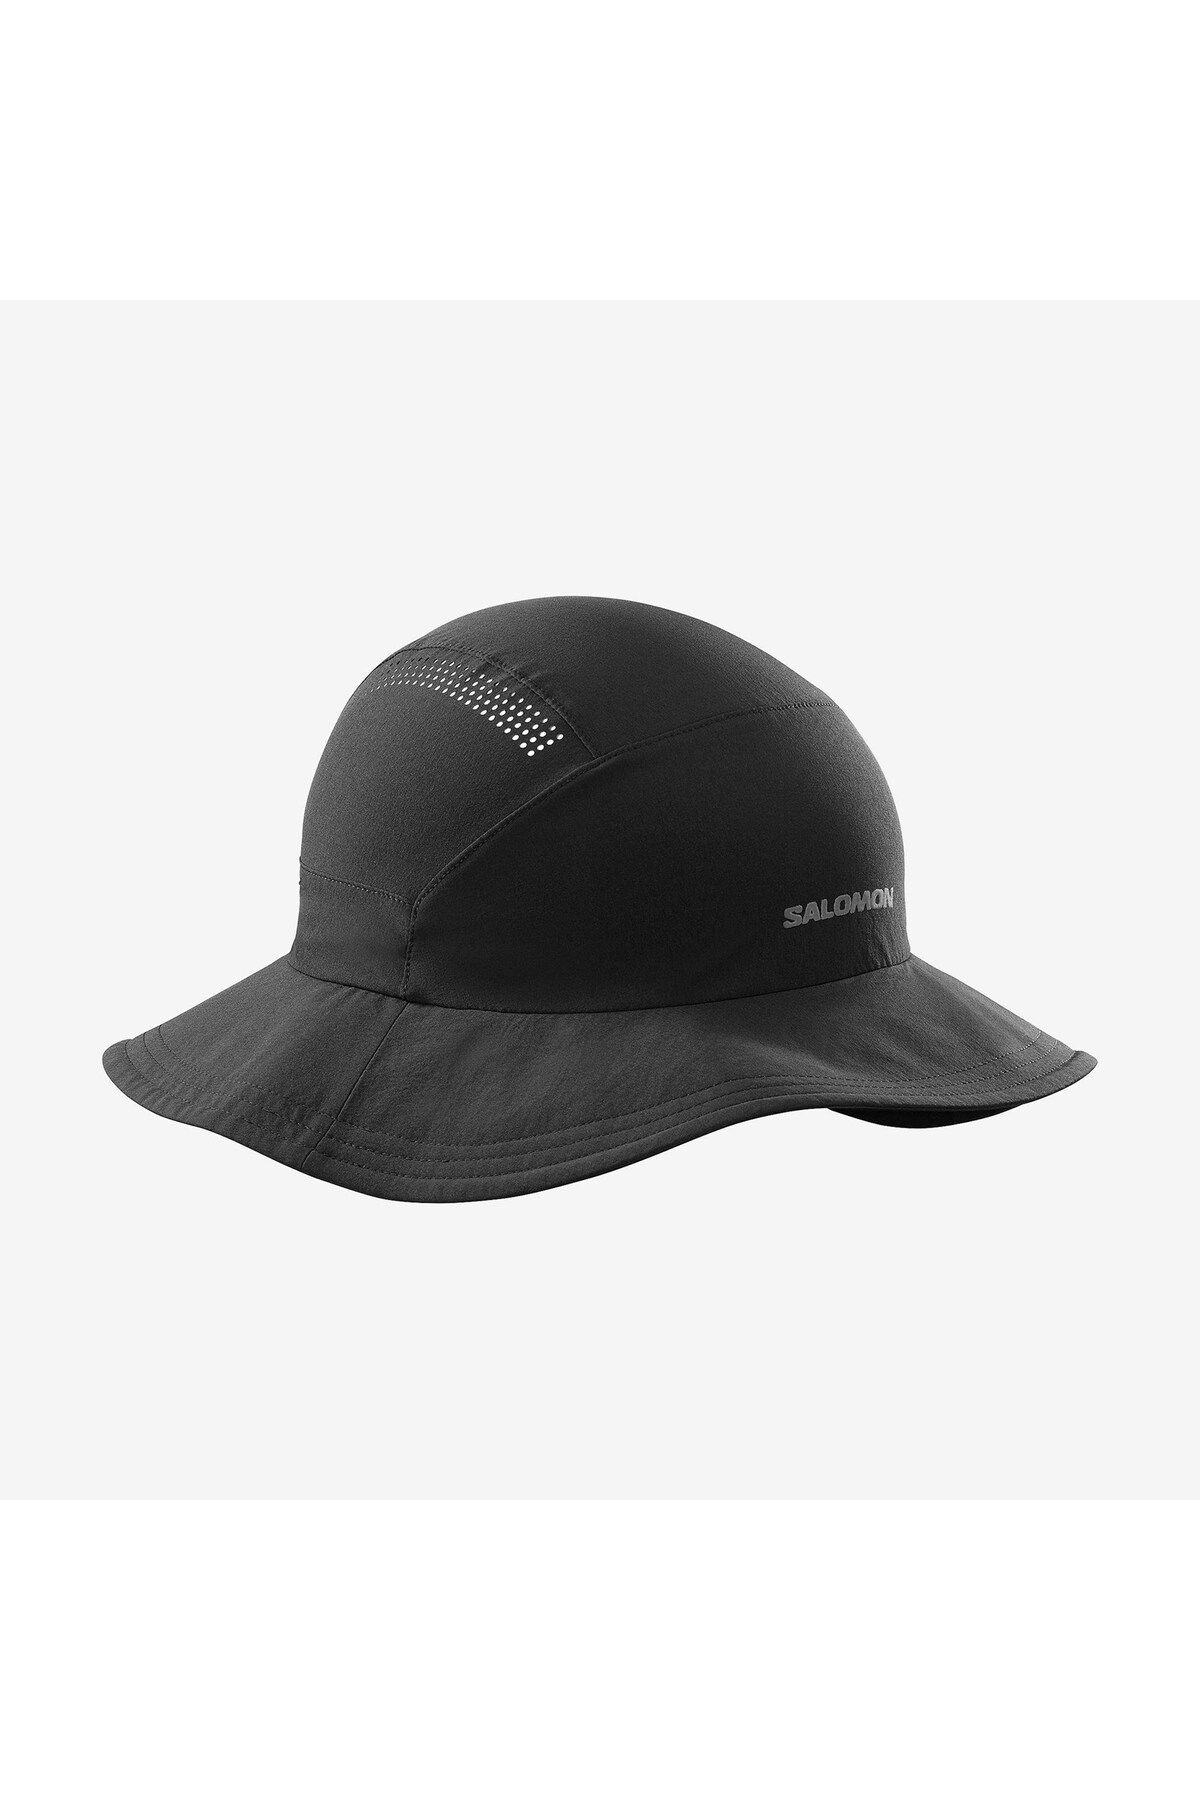 Salomon Line Deep Black // Hat LC2237600